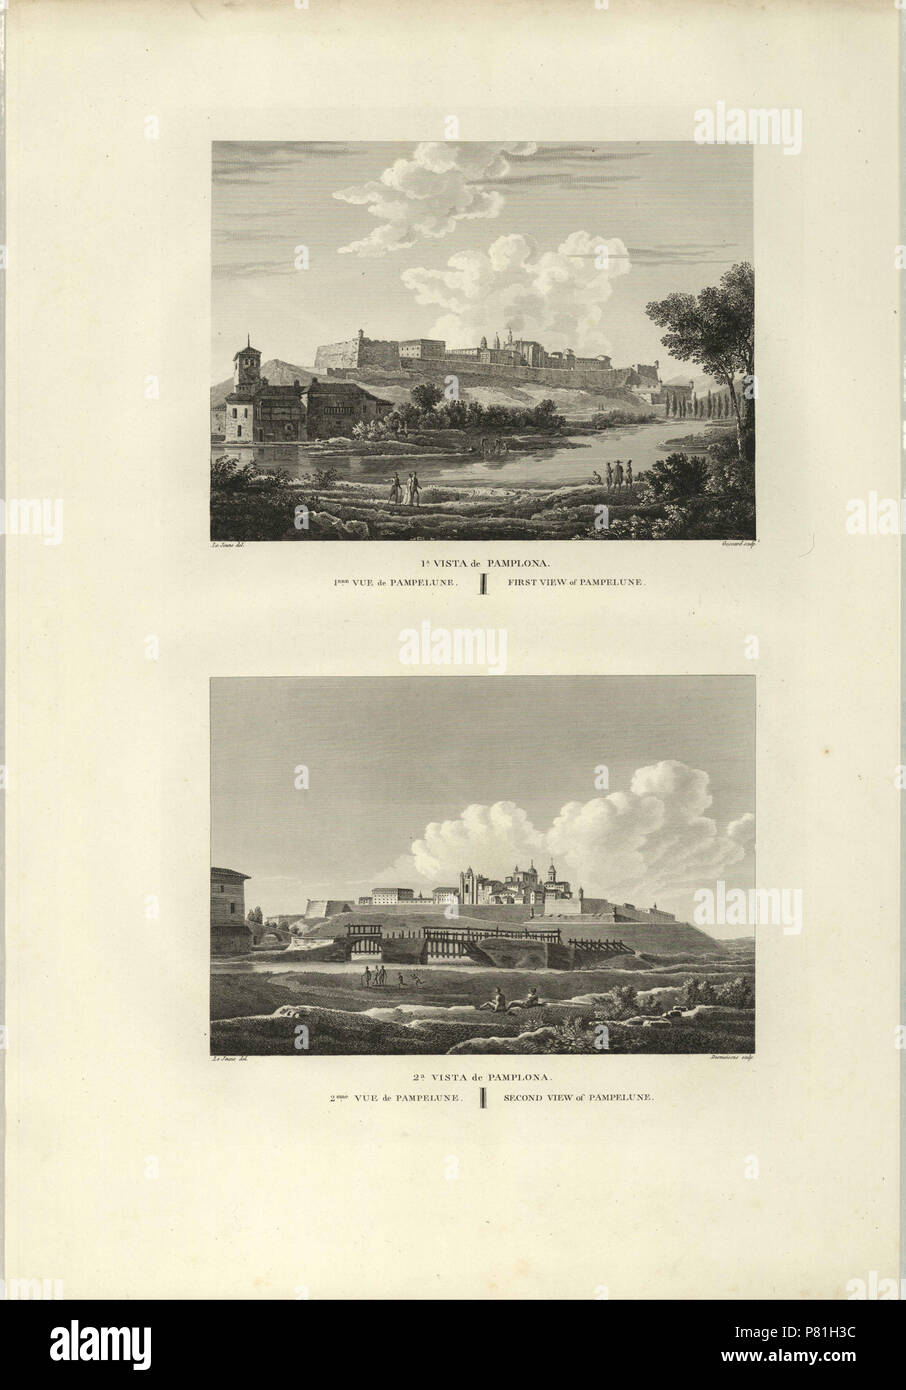 Español: Primera vista de Pamplona. Segunda vista de Pamplona. 1820 3 1806-1820, Voyage pittoresque et historique de l'Espagne, tomo II, Pamplona Stock Photo